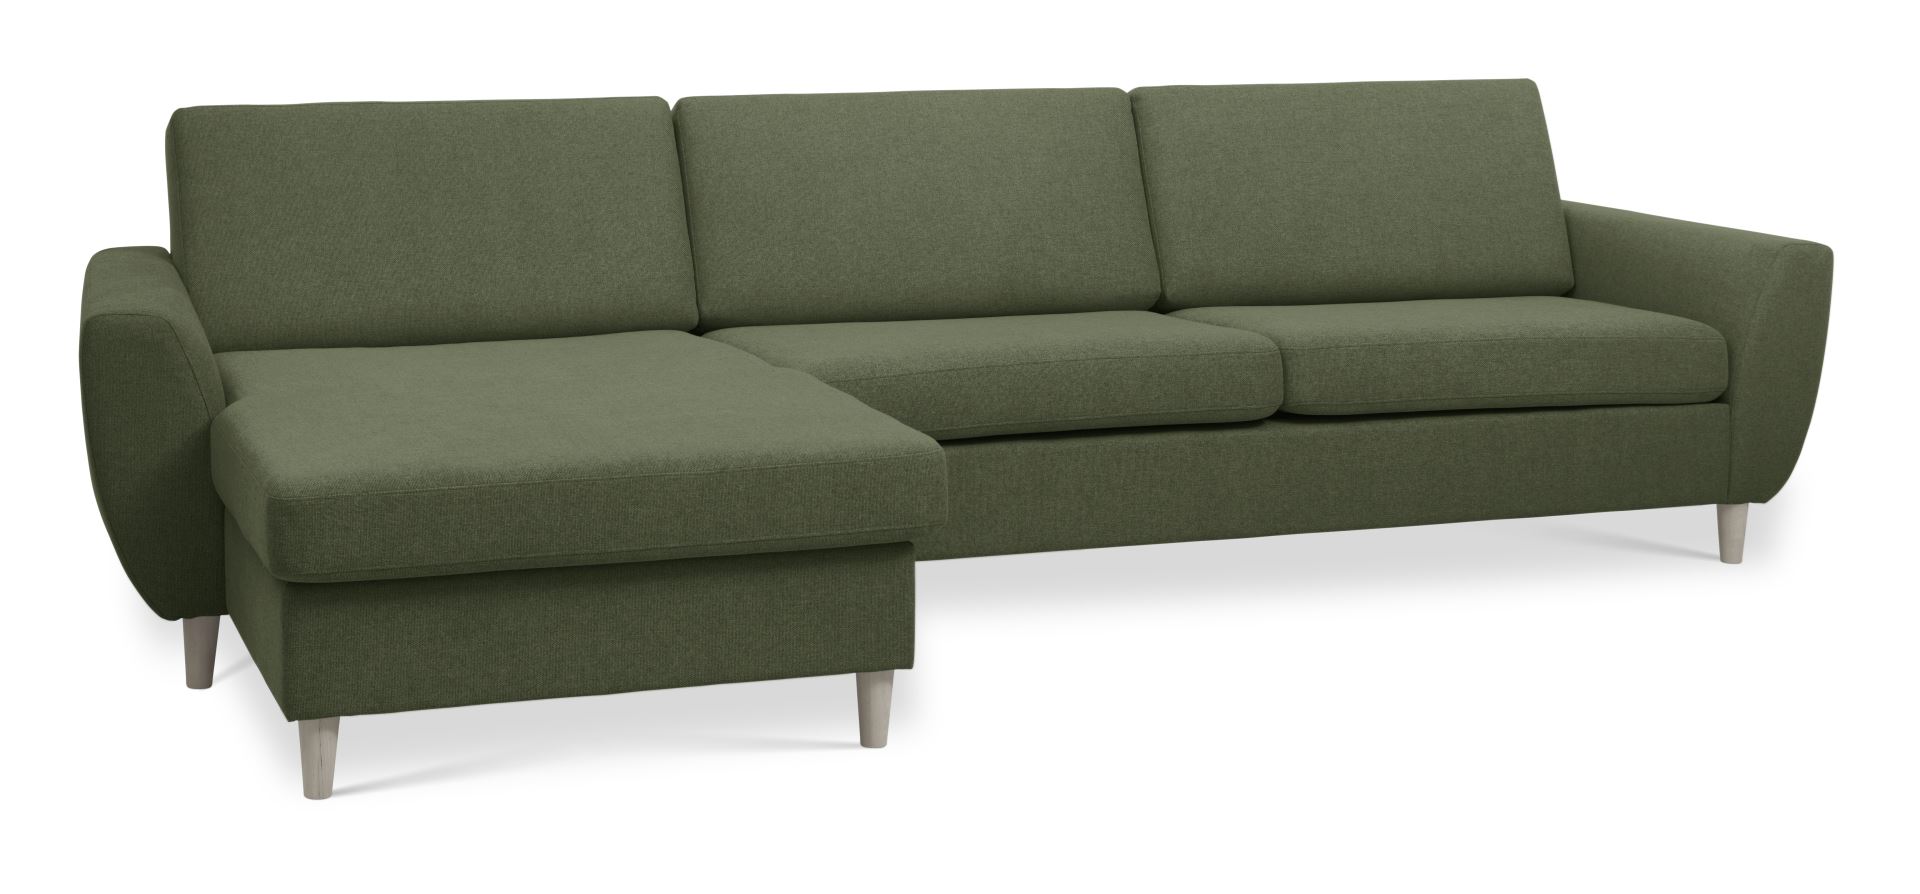 Wendy set 8 3D XL sofa, m. chaiselong - vinter mosgrøn polyester stof og natur træ